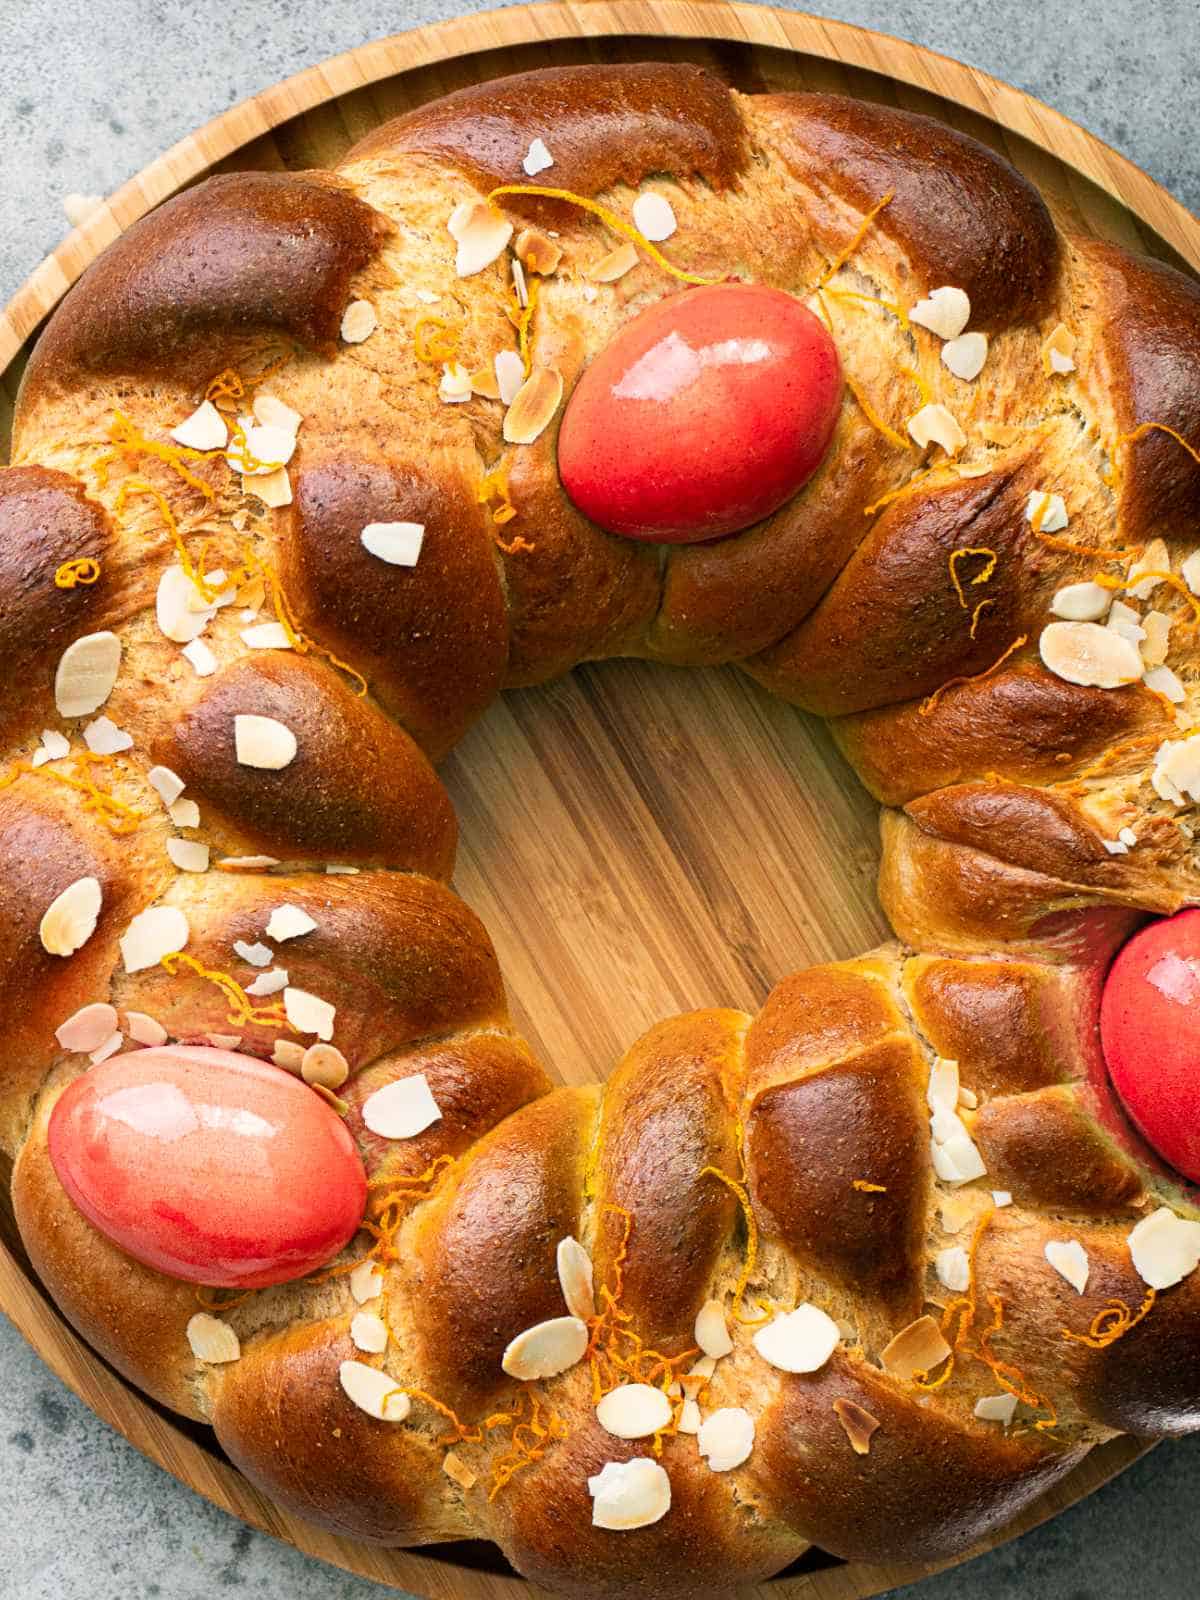 Greek Easter Tsoureki bread wreath with red eggs tucked into it.